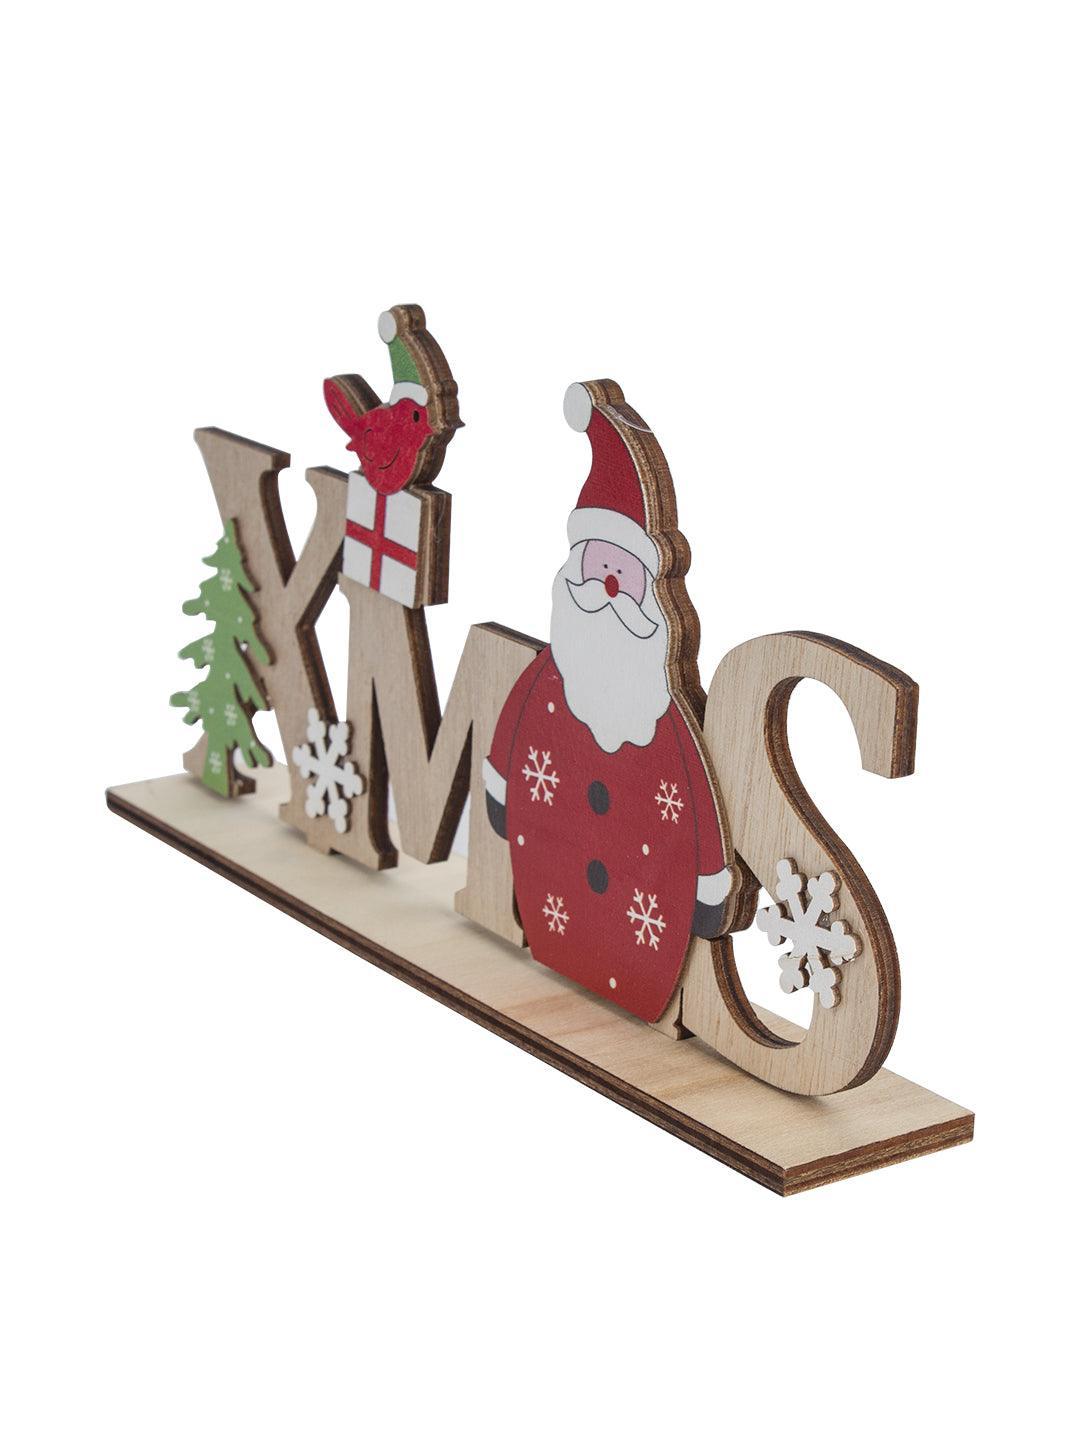 "Xmas" Standing Plaque With Standing Santa Claus - Christmas Decoration Showpiece - MARKET 99